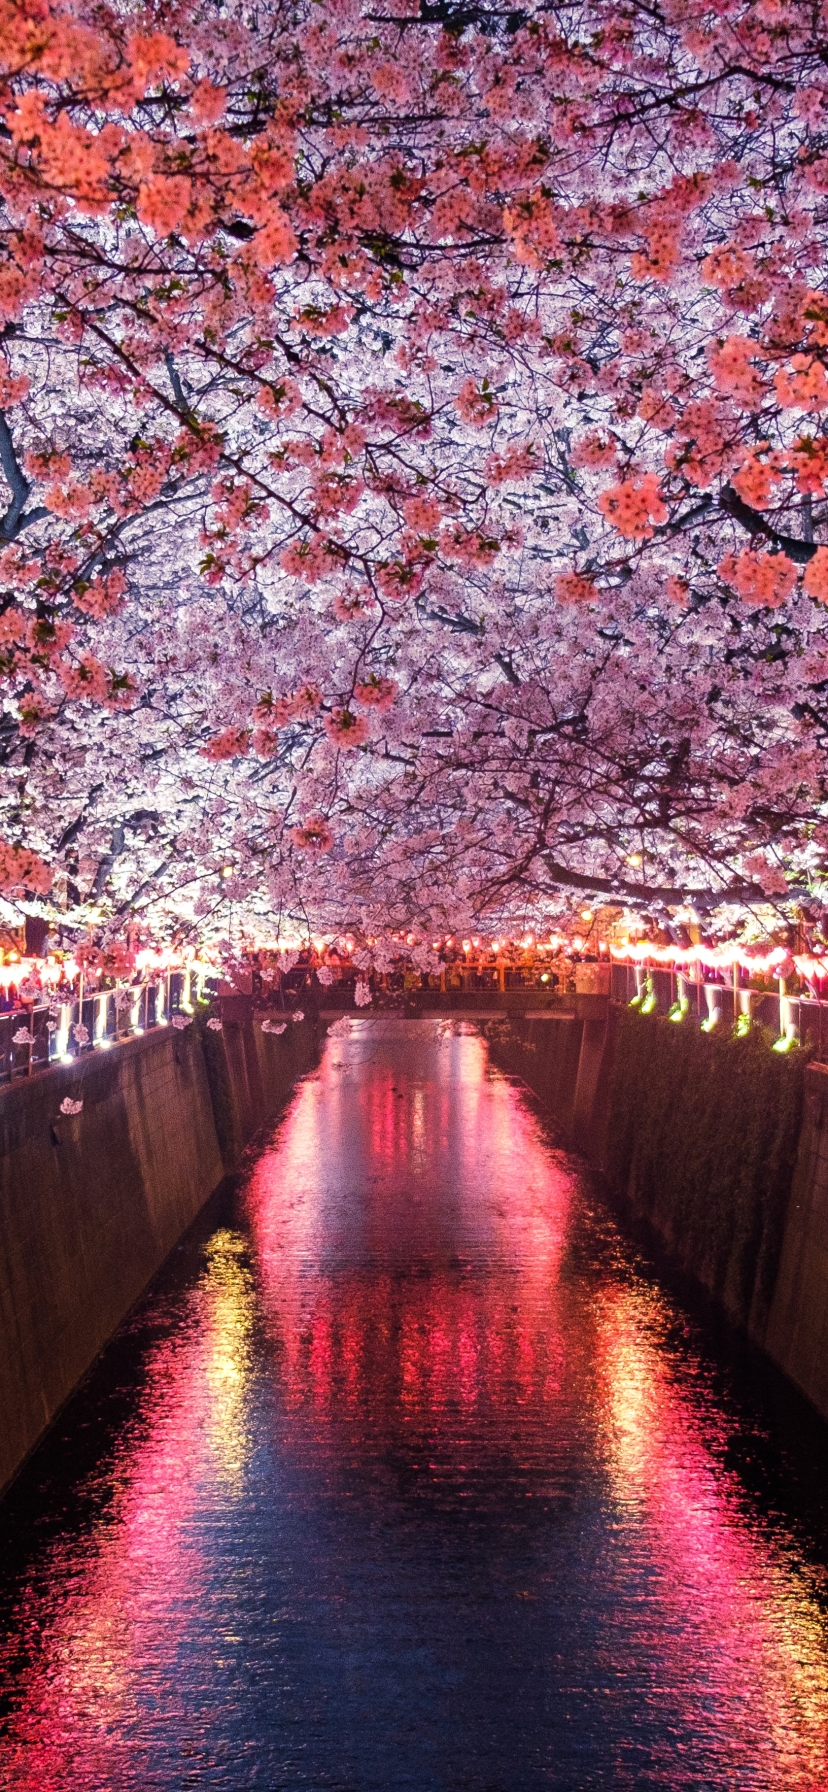 Lighted Cherry Blossom Tunnel